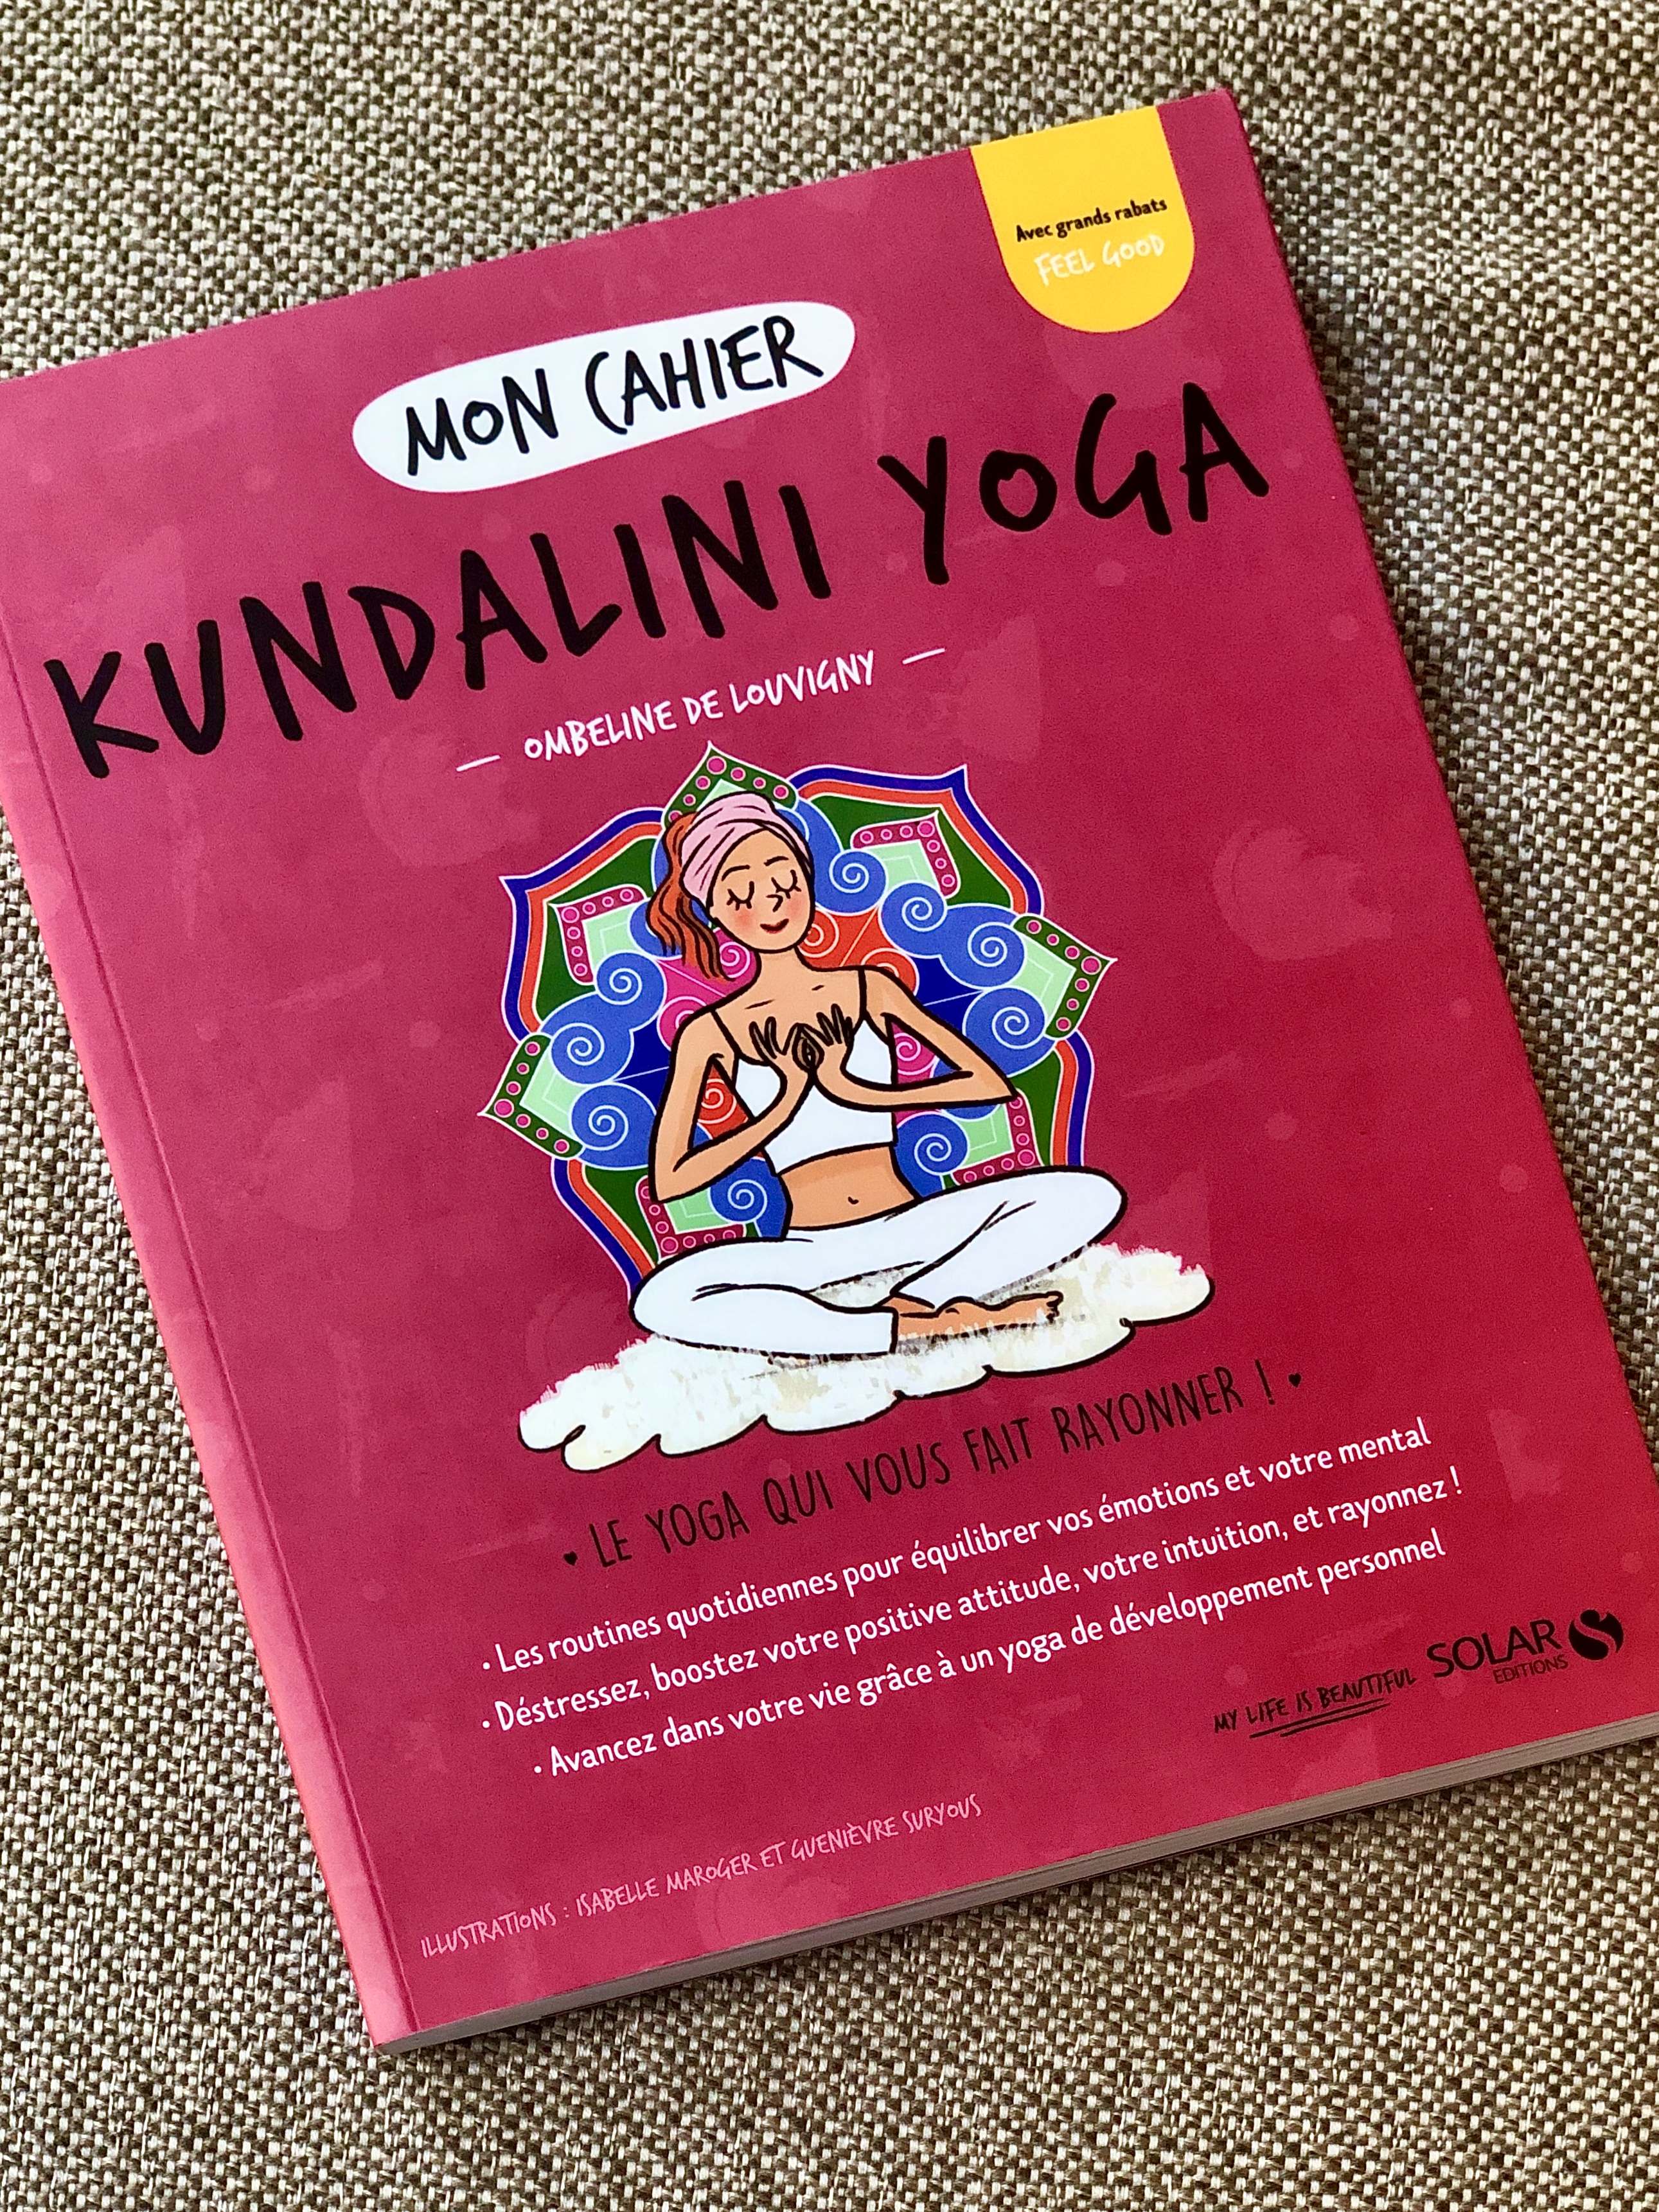 couverture Mon Cahier Yoga Kundalini , Solar ; collection Mon cahier ; ombeline de Louvigny